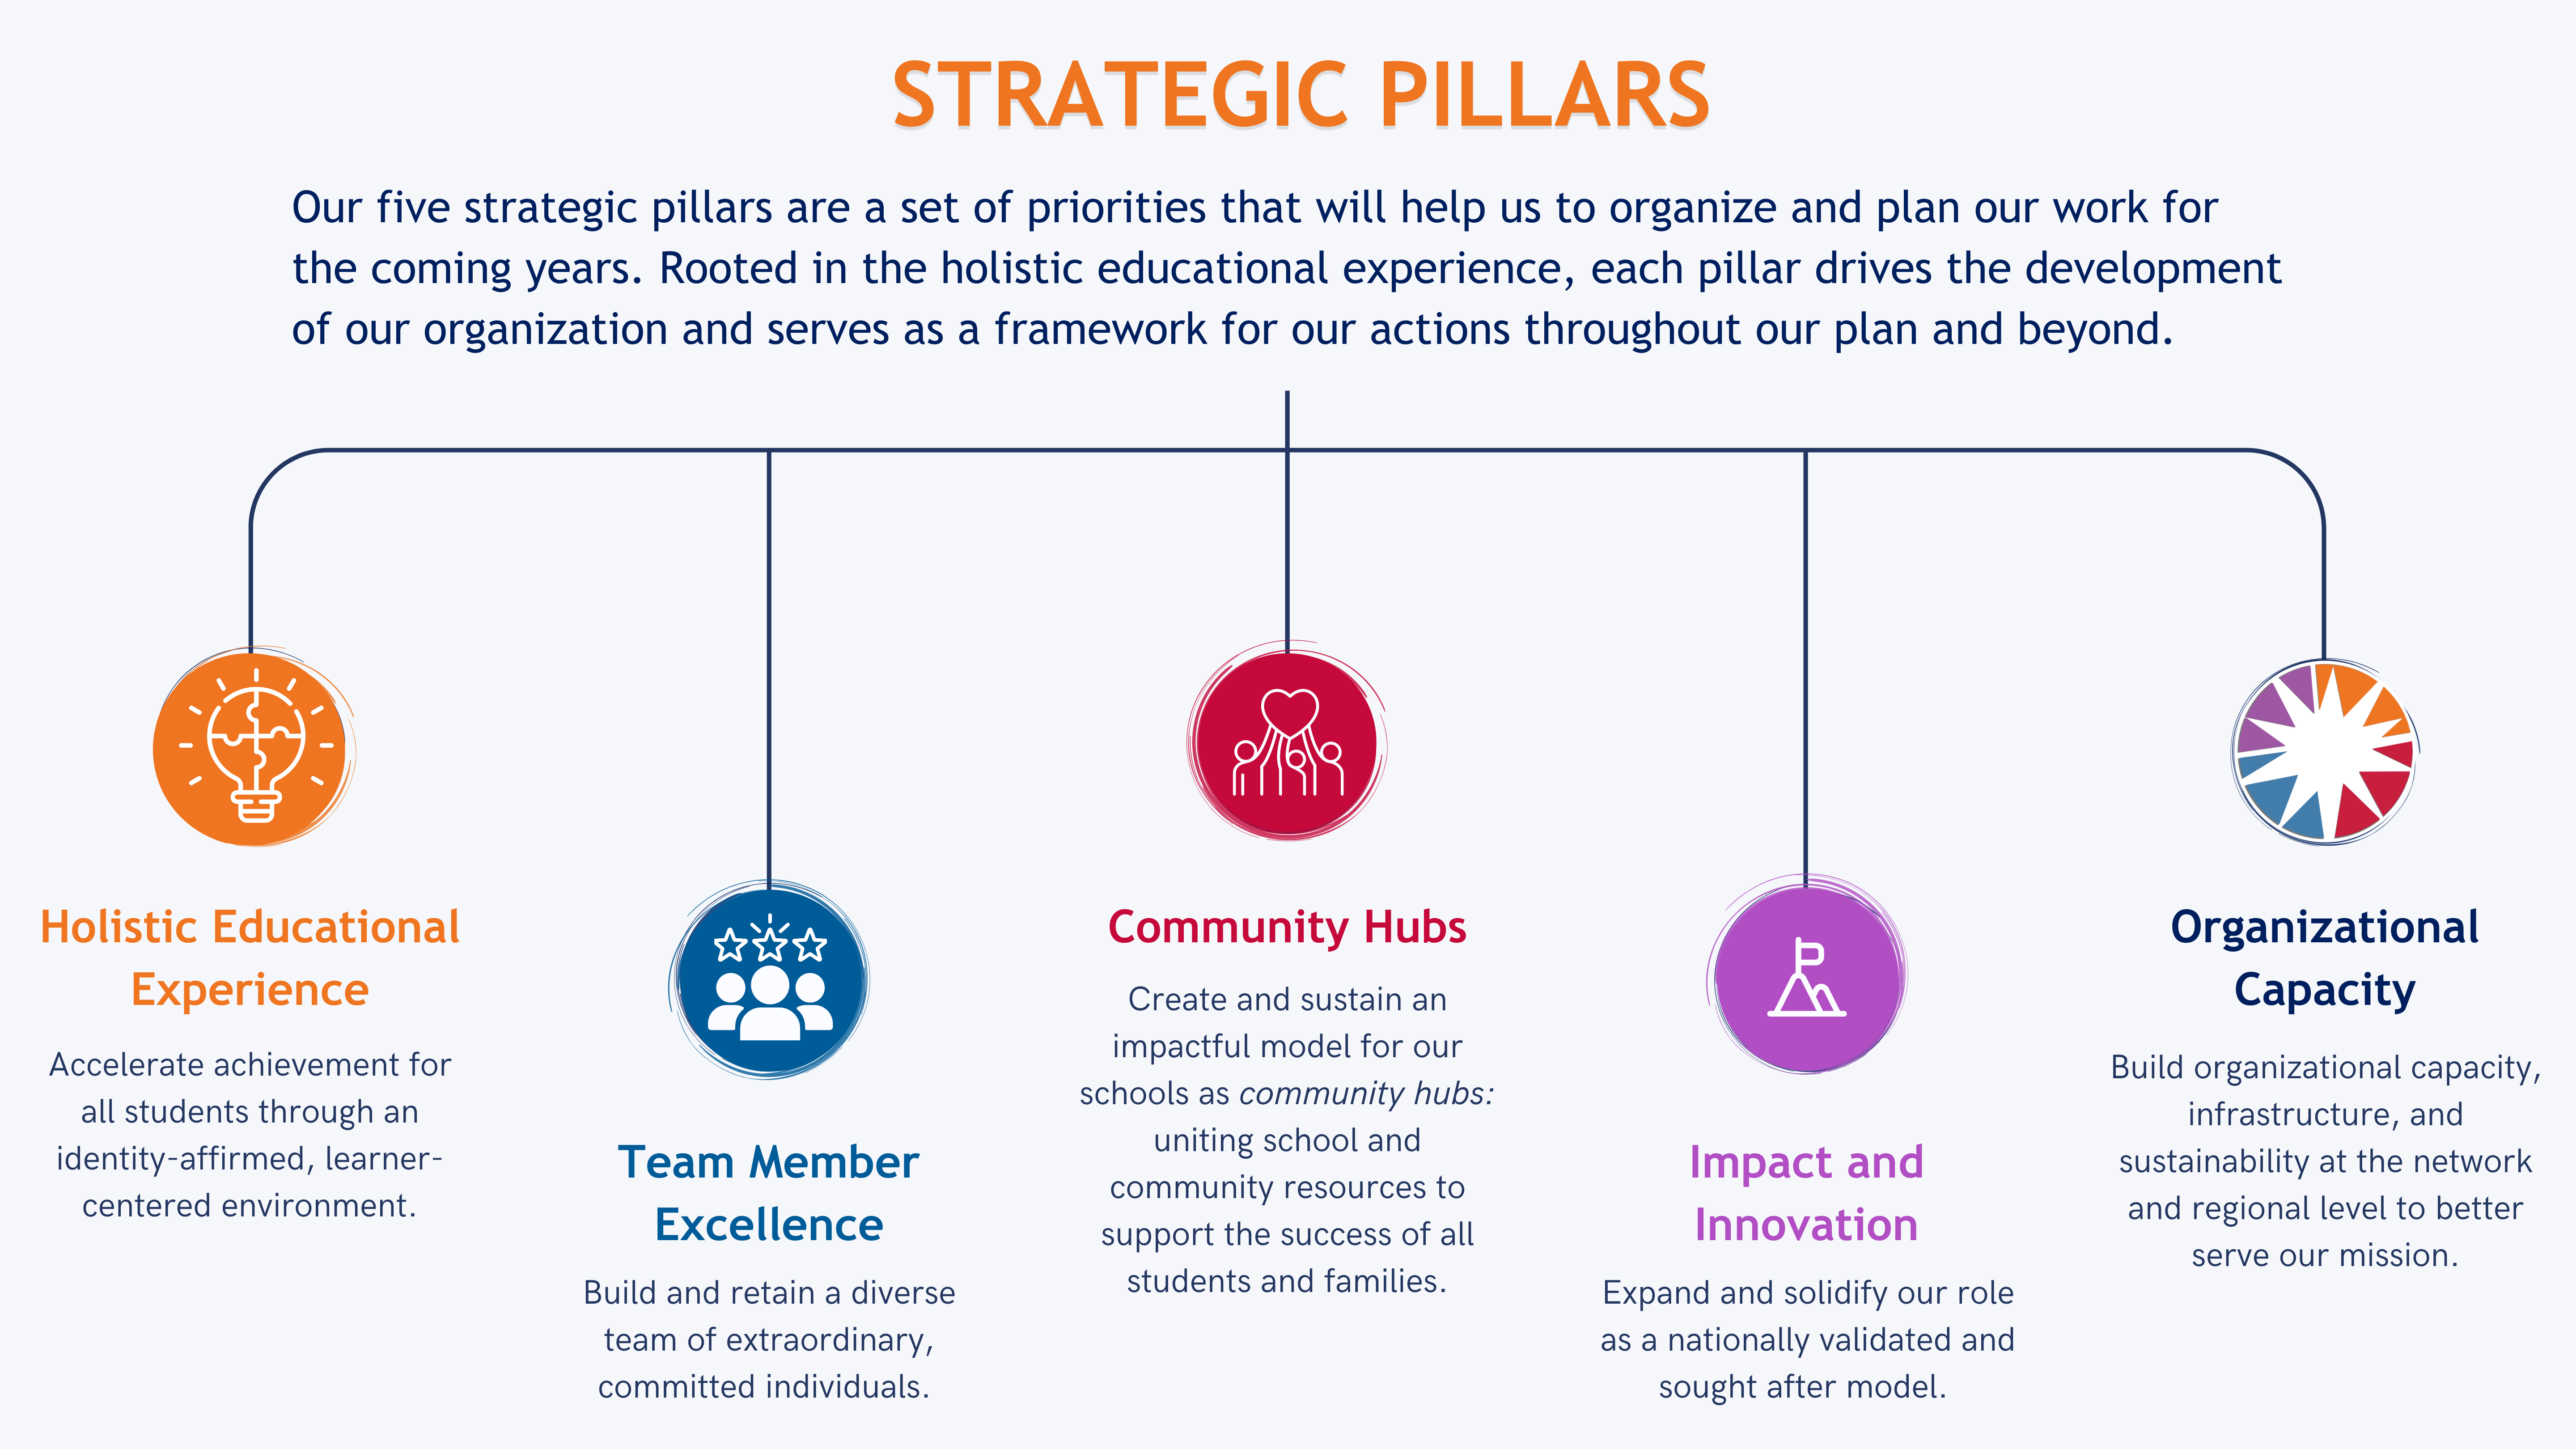 Pillars of the Strategic Plan